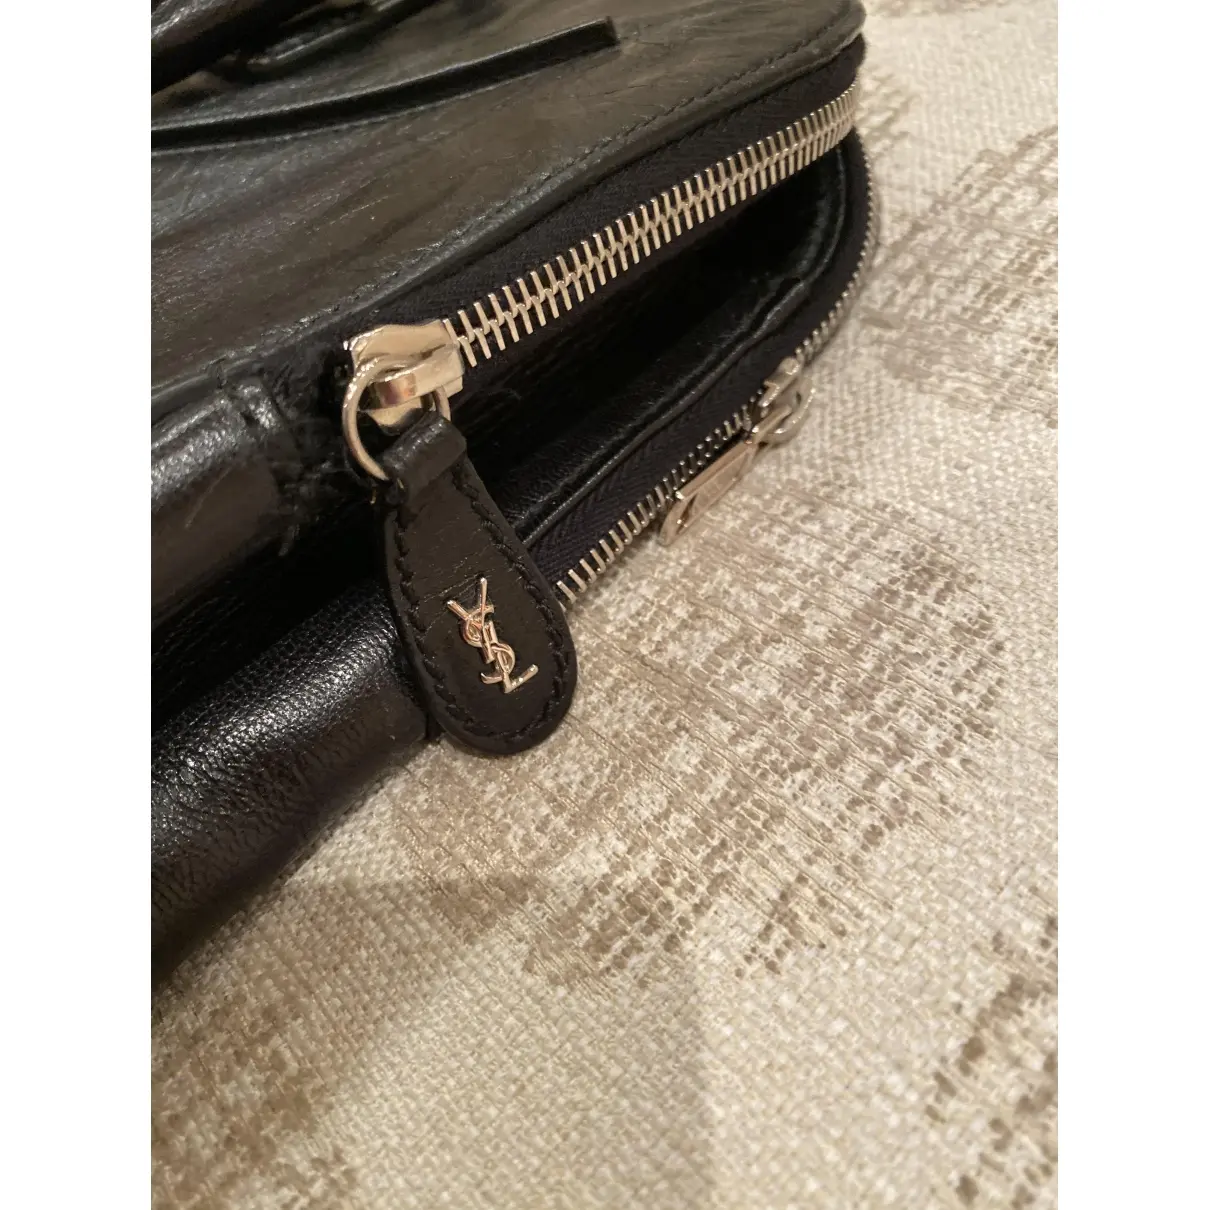 Buy Yves Saint Laurent Leather satchel online